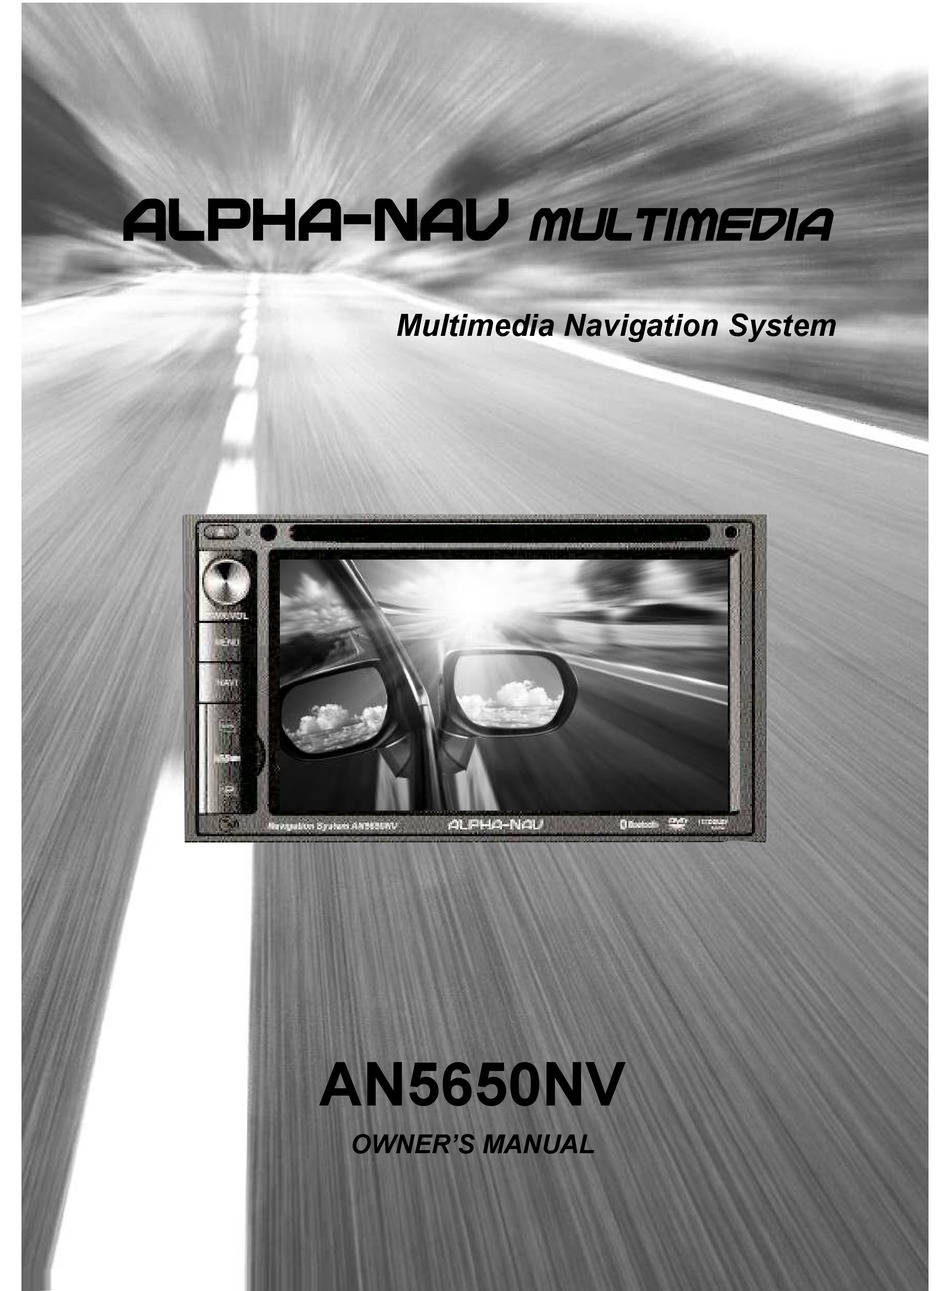 ALPHA-NAV AN5650NV OWNER'S MANUAL Pdf Download | ManualsLib